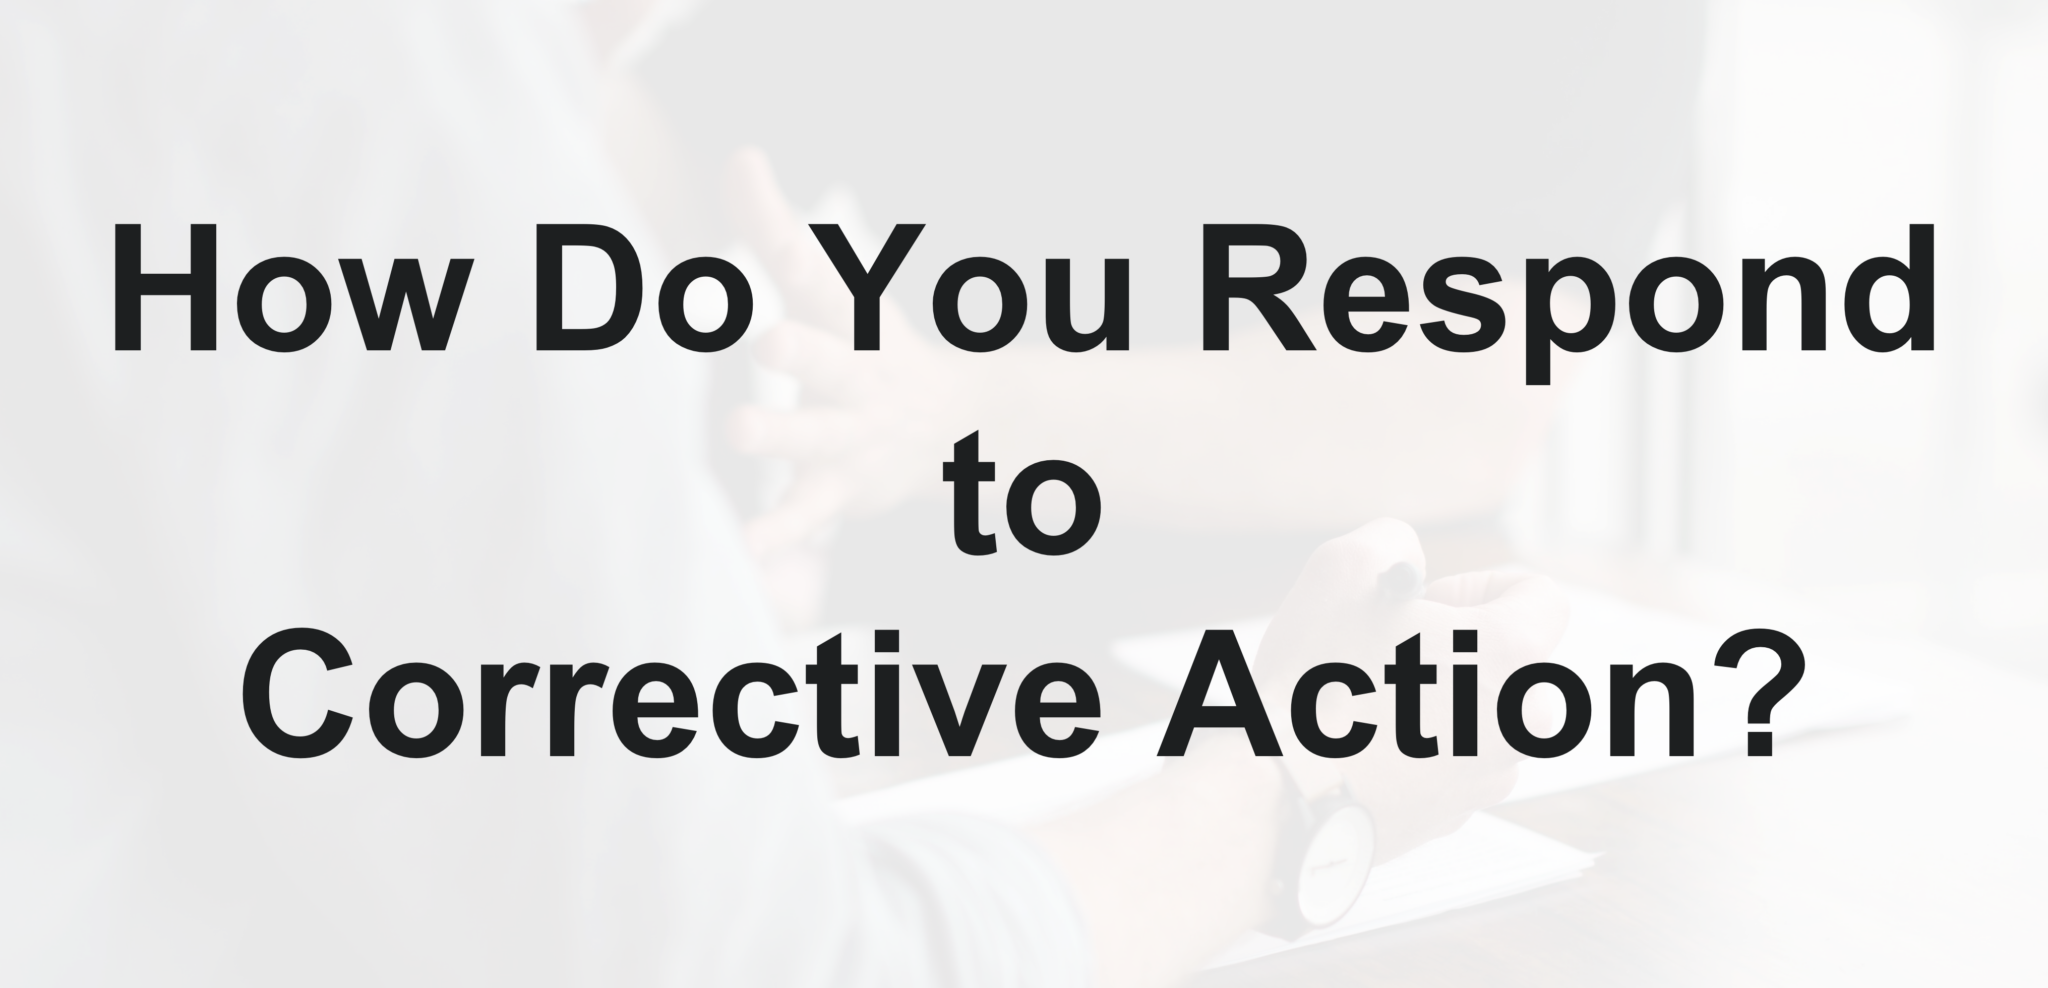 How Do You Respond to Corrective Action